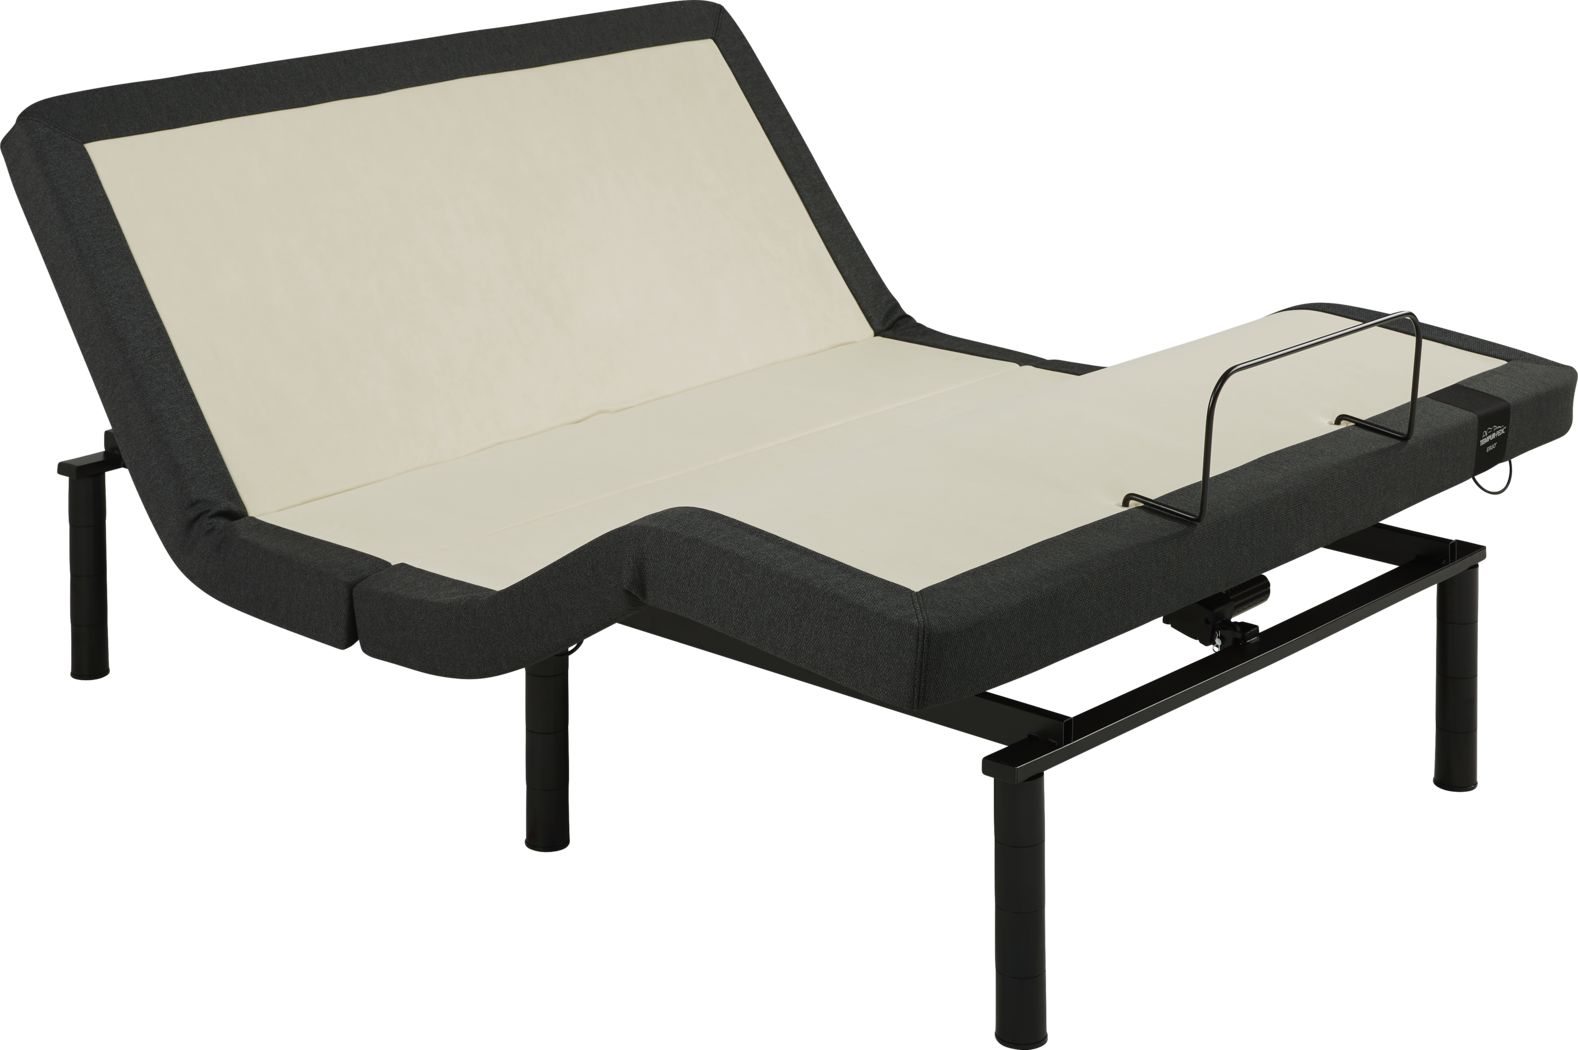 tempurpedic adjustable base for queen mattress